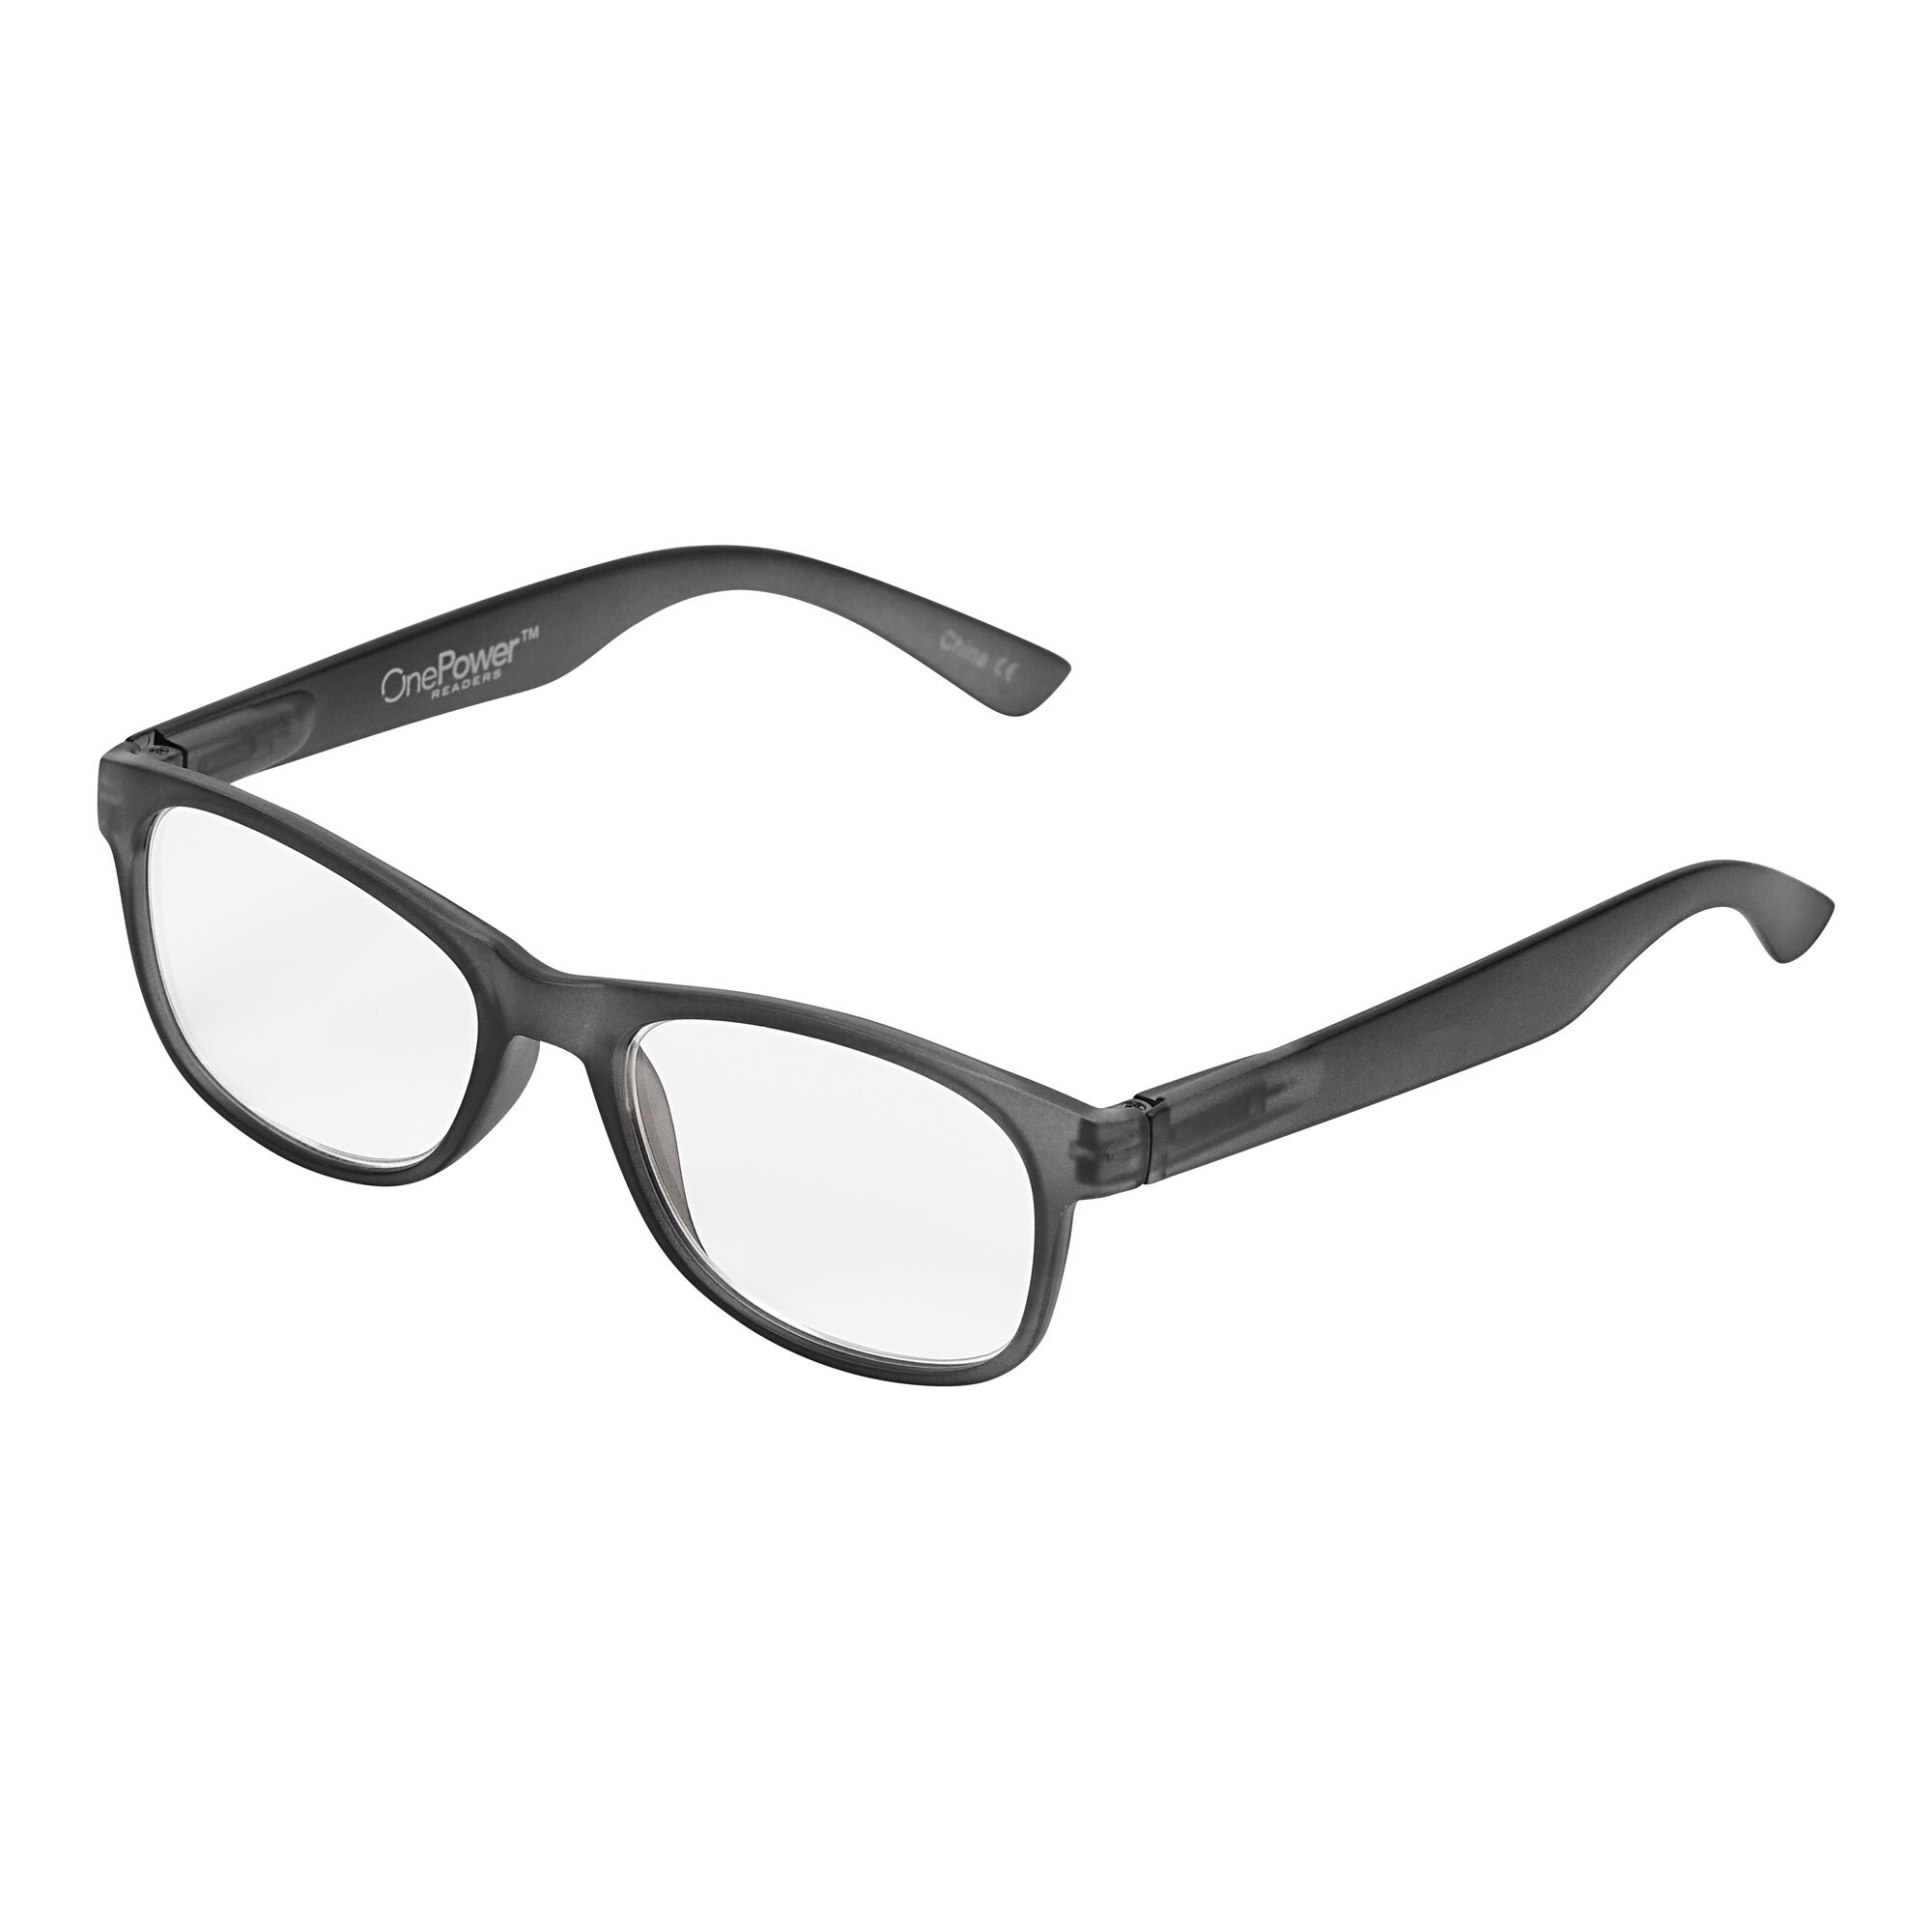 Image of Mehrstärkenbrille "One Power Readers", grau